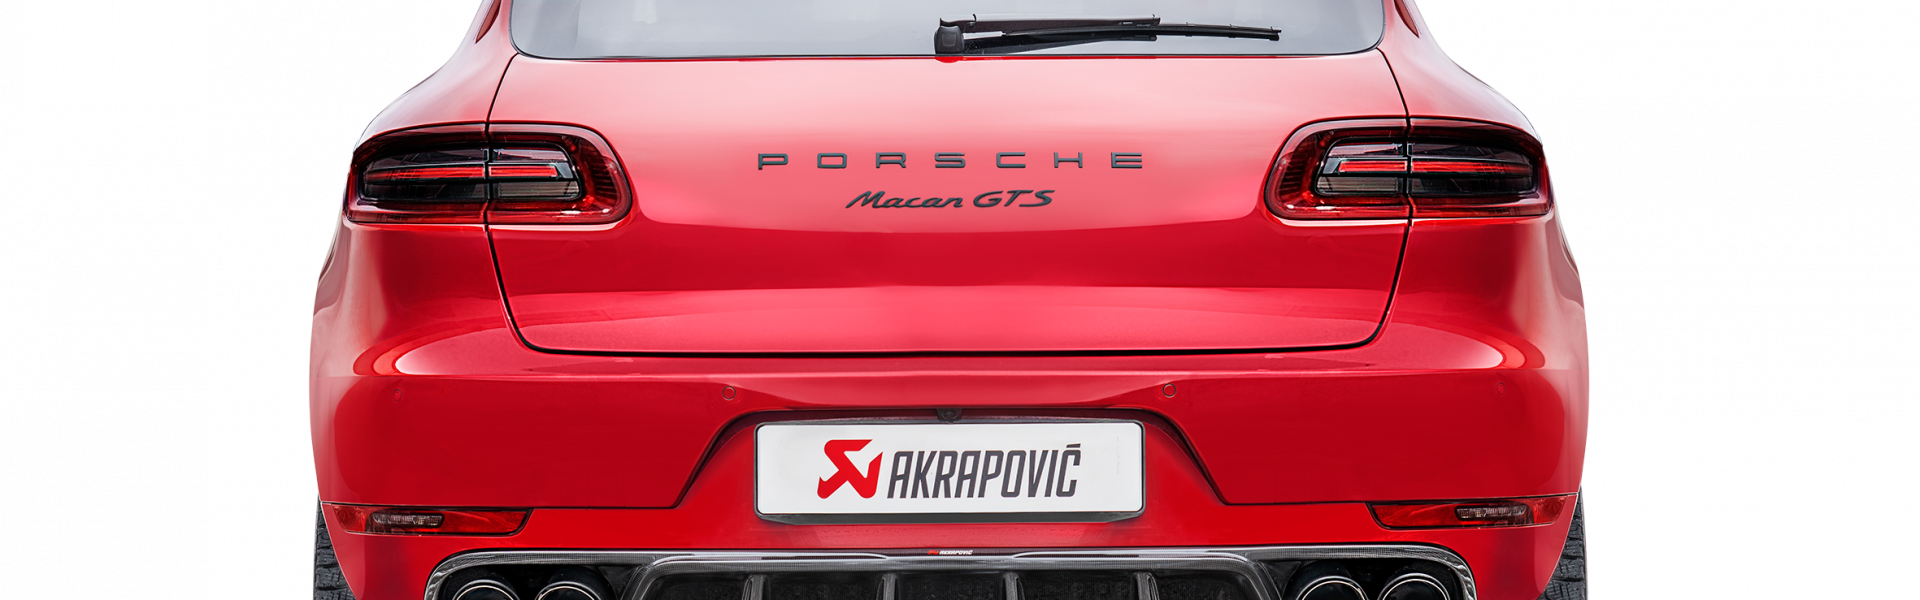 Performance díly pro automobil Porsche Macan GTS 95B